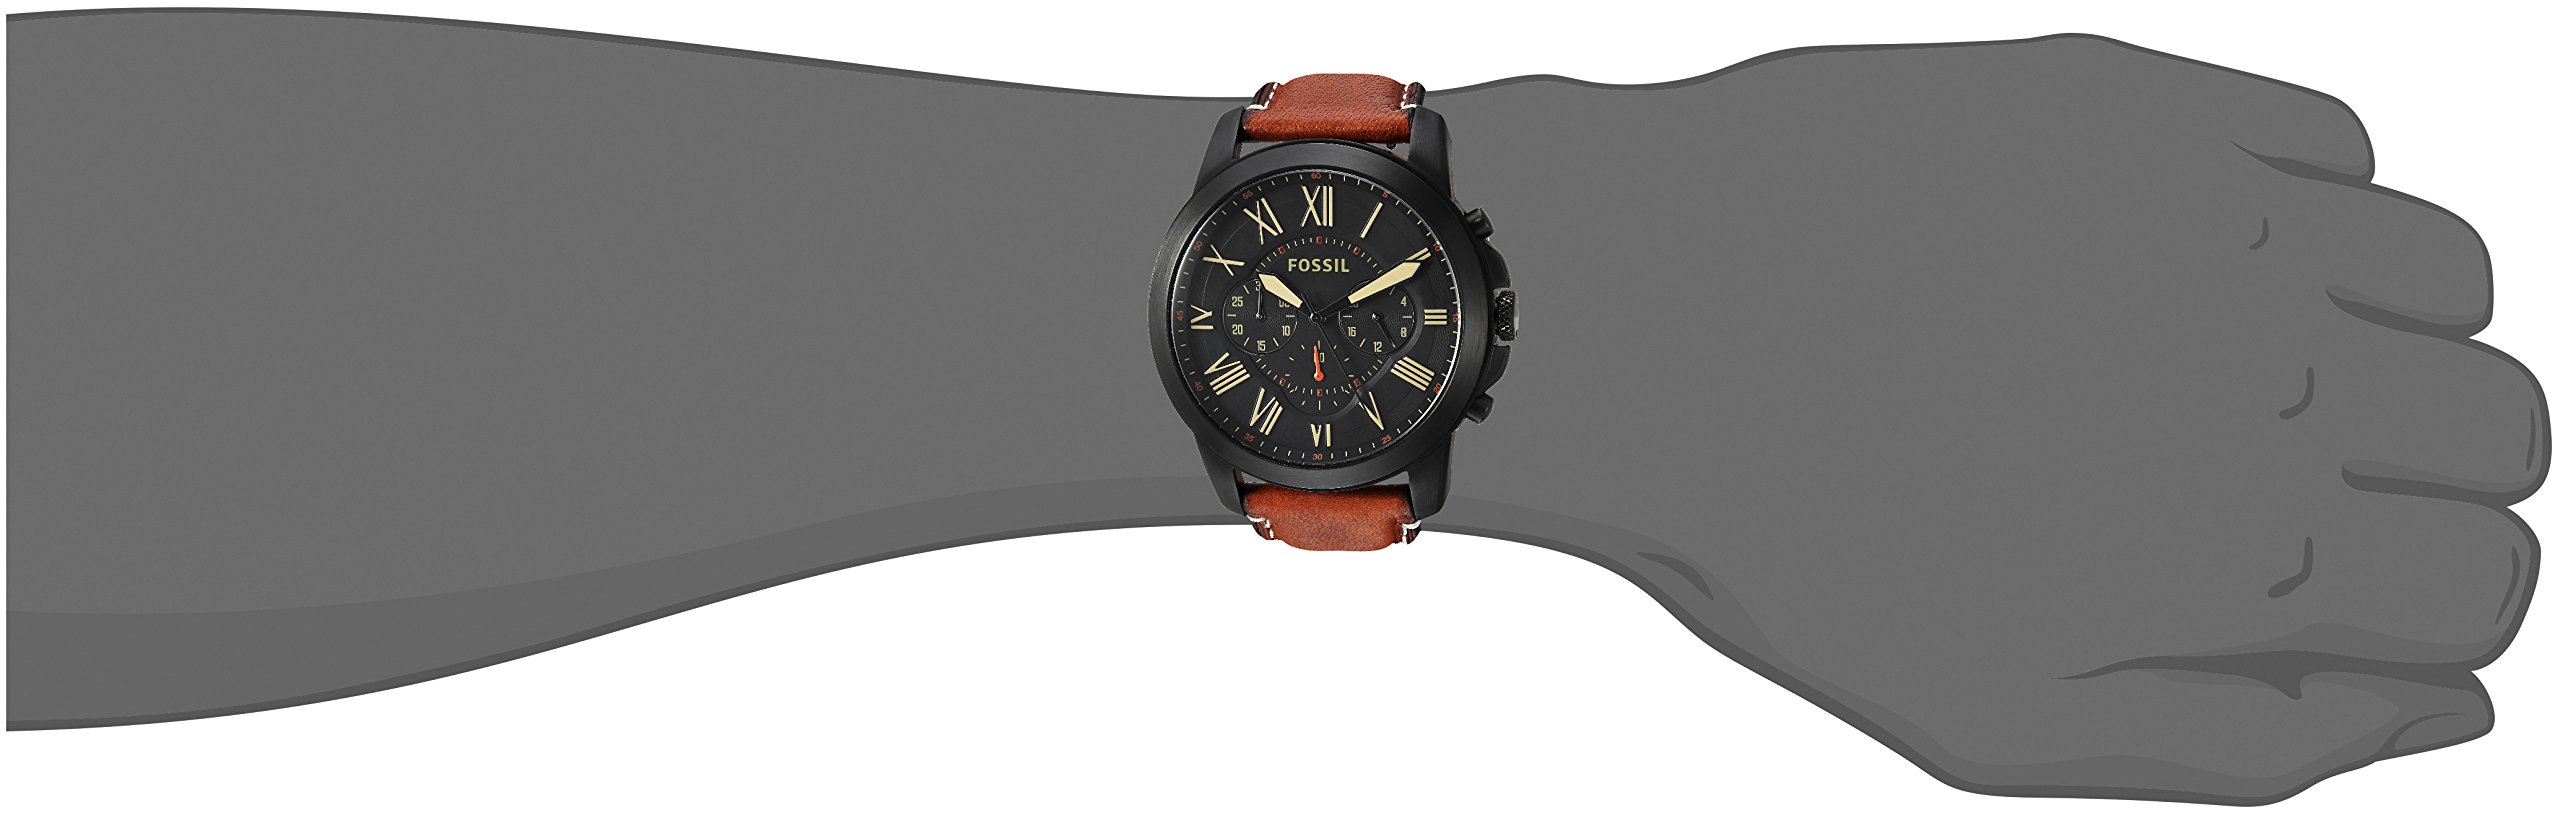 Fossil Men's Grant Quartz Leather Chronograph Watch, Color: Black, Brown (Model: FS5241)